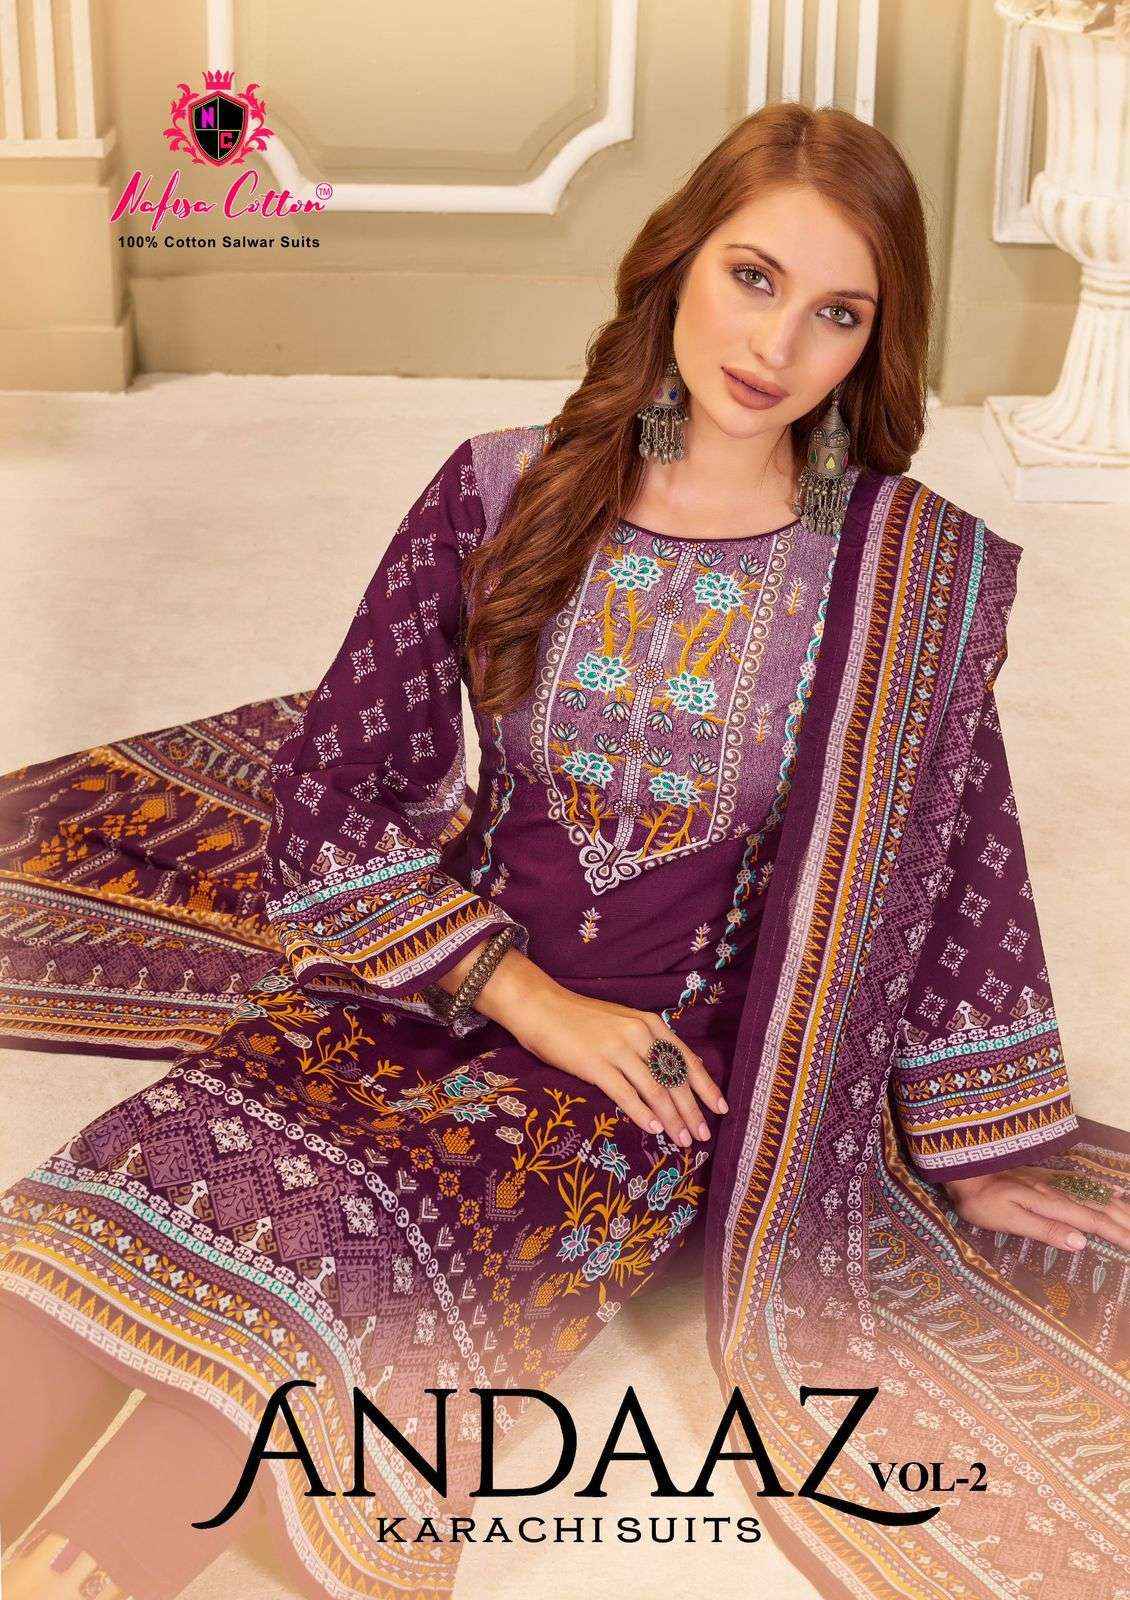 Nafisa Cotton Andaaz Karachi Suits Vol 2 Cotton Dress Material 6 pcs Catalogue